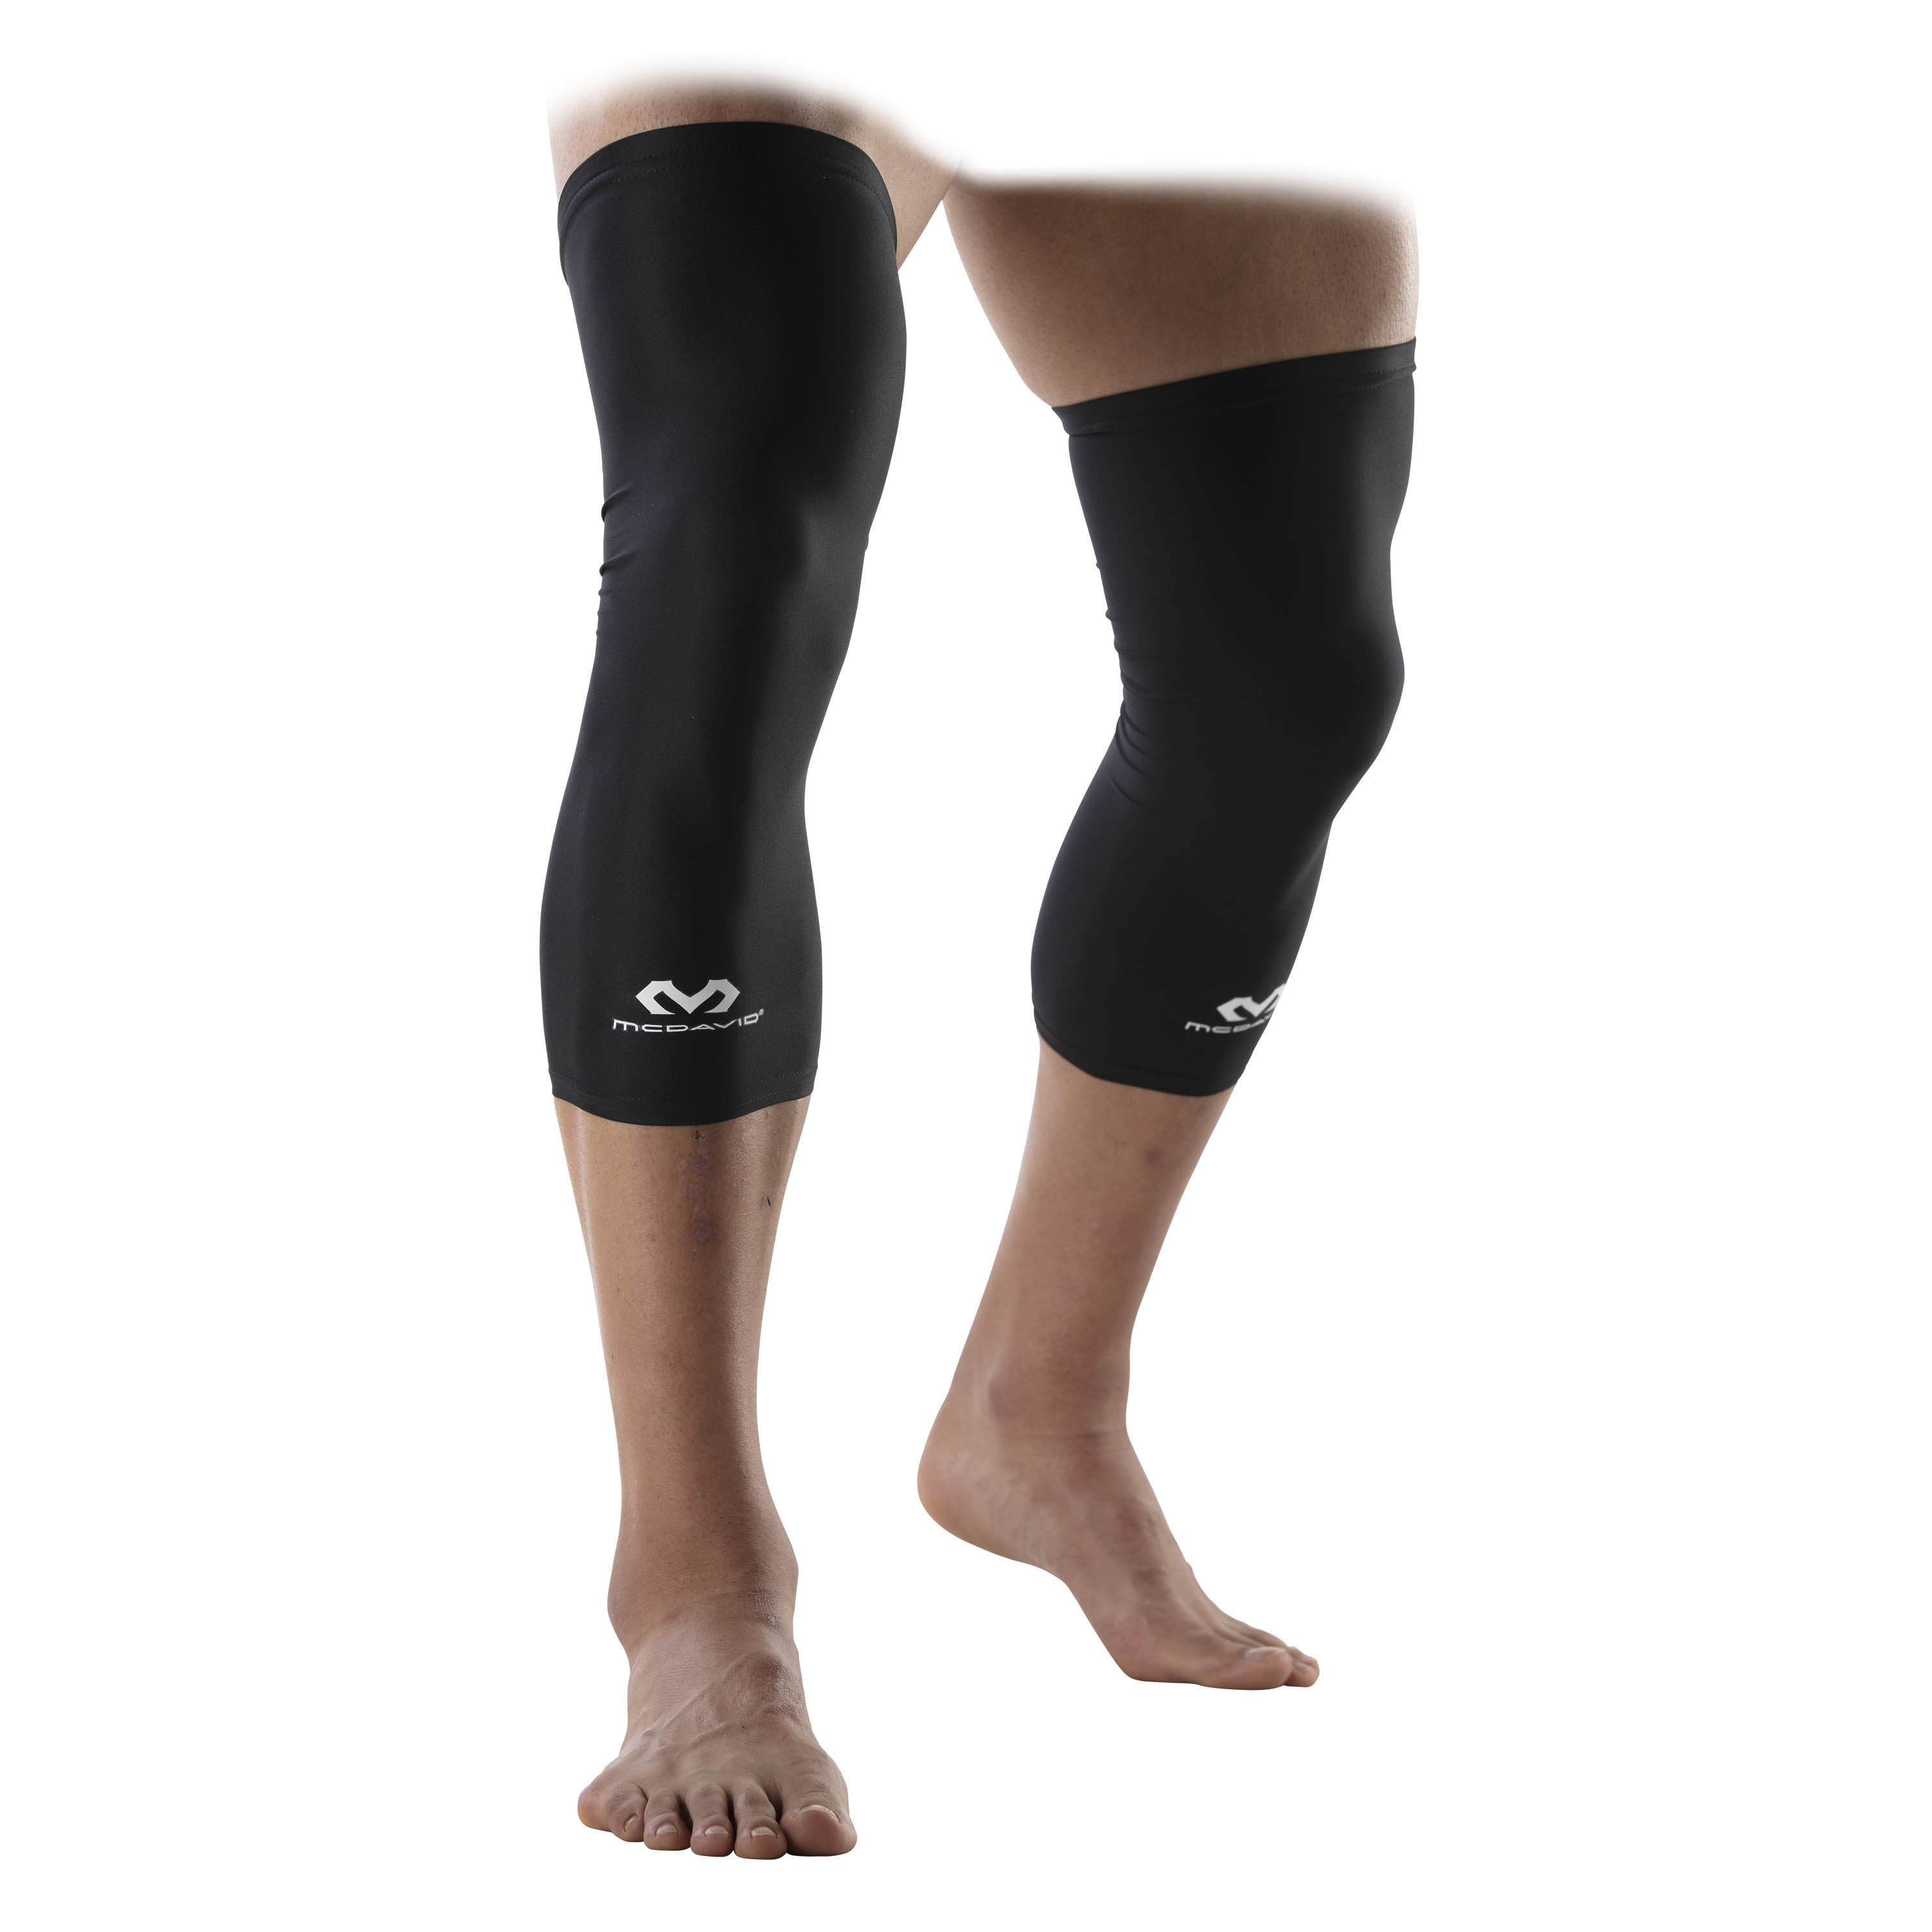 McDavid Sport Compression Knee Sleeves, Pair, Black, Adult Large